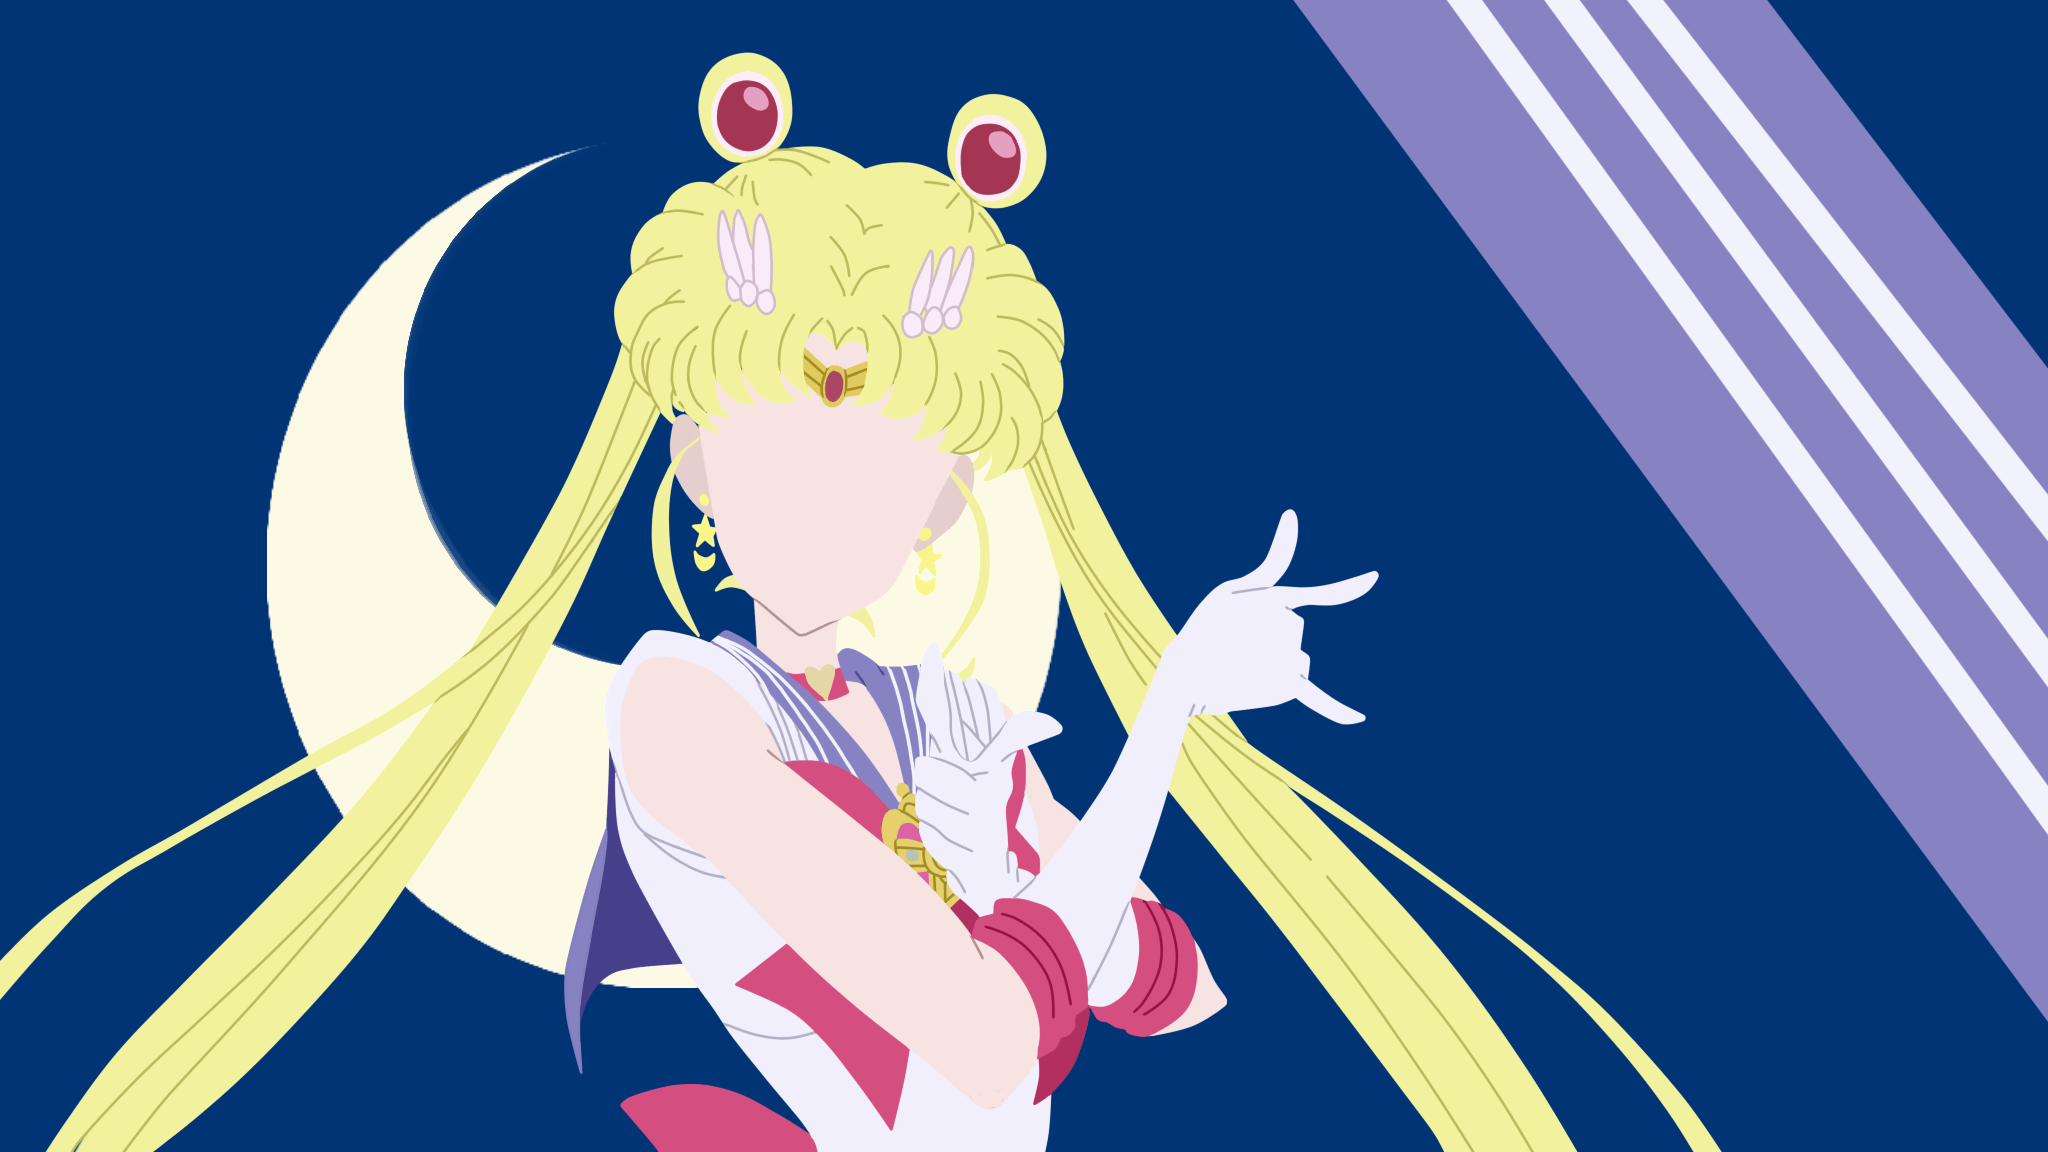 Sailor moon wallpaper i made for my phone and desktop. - Sailor Moon